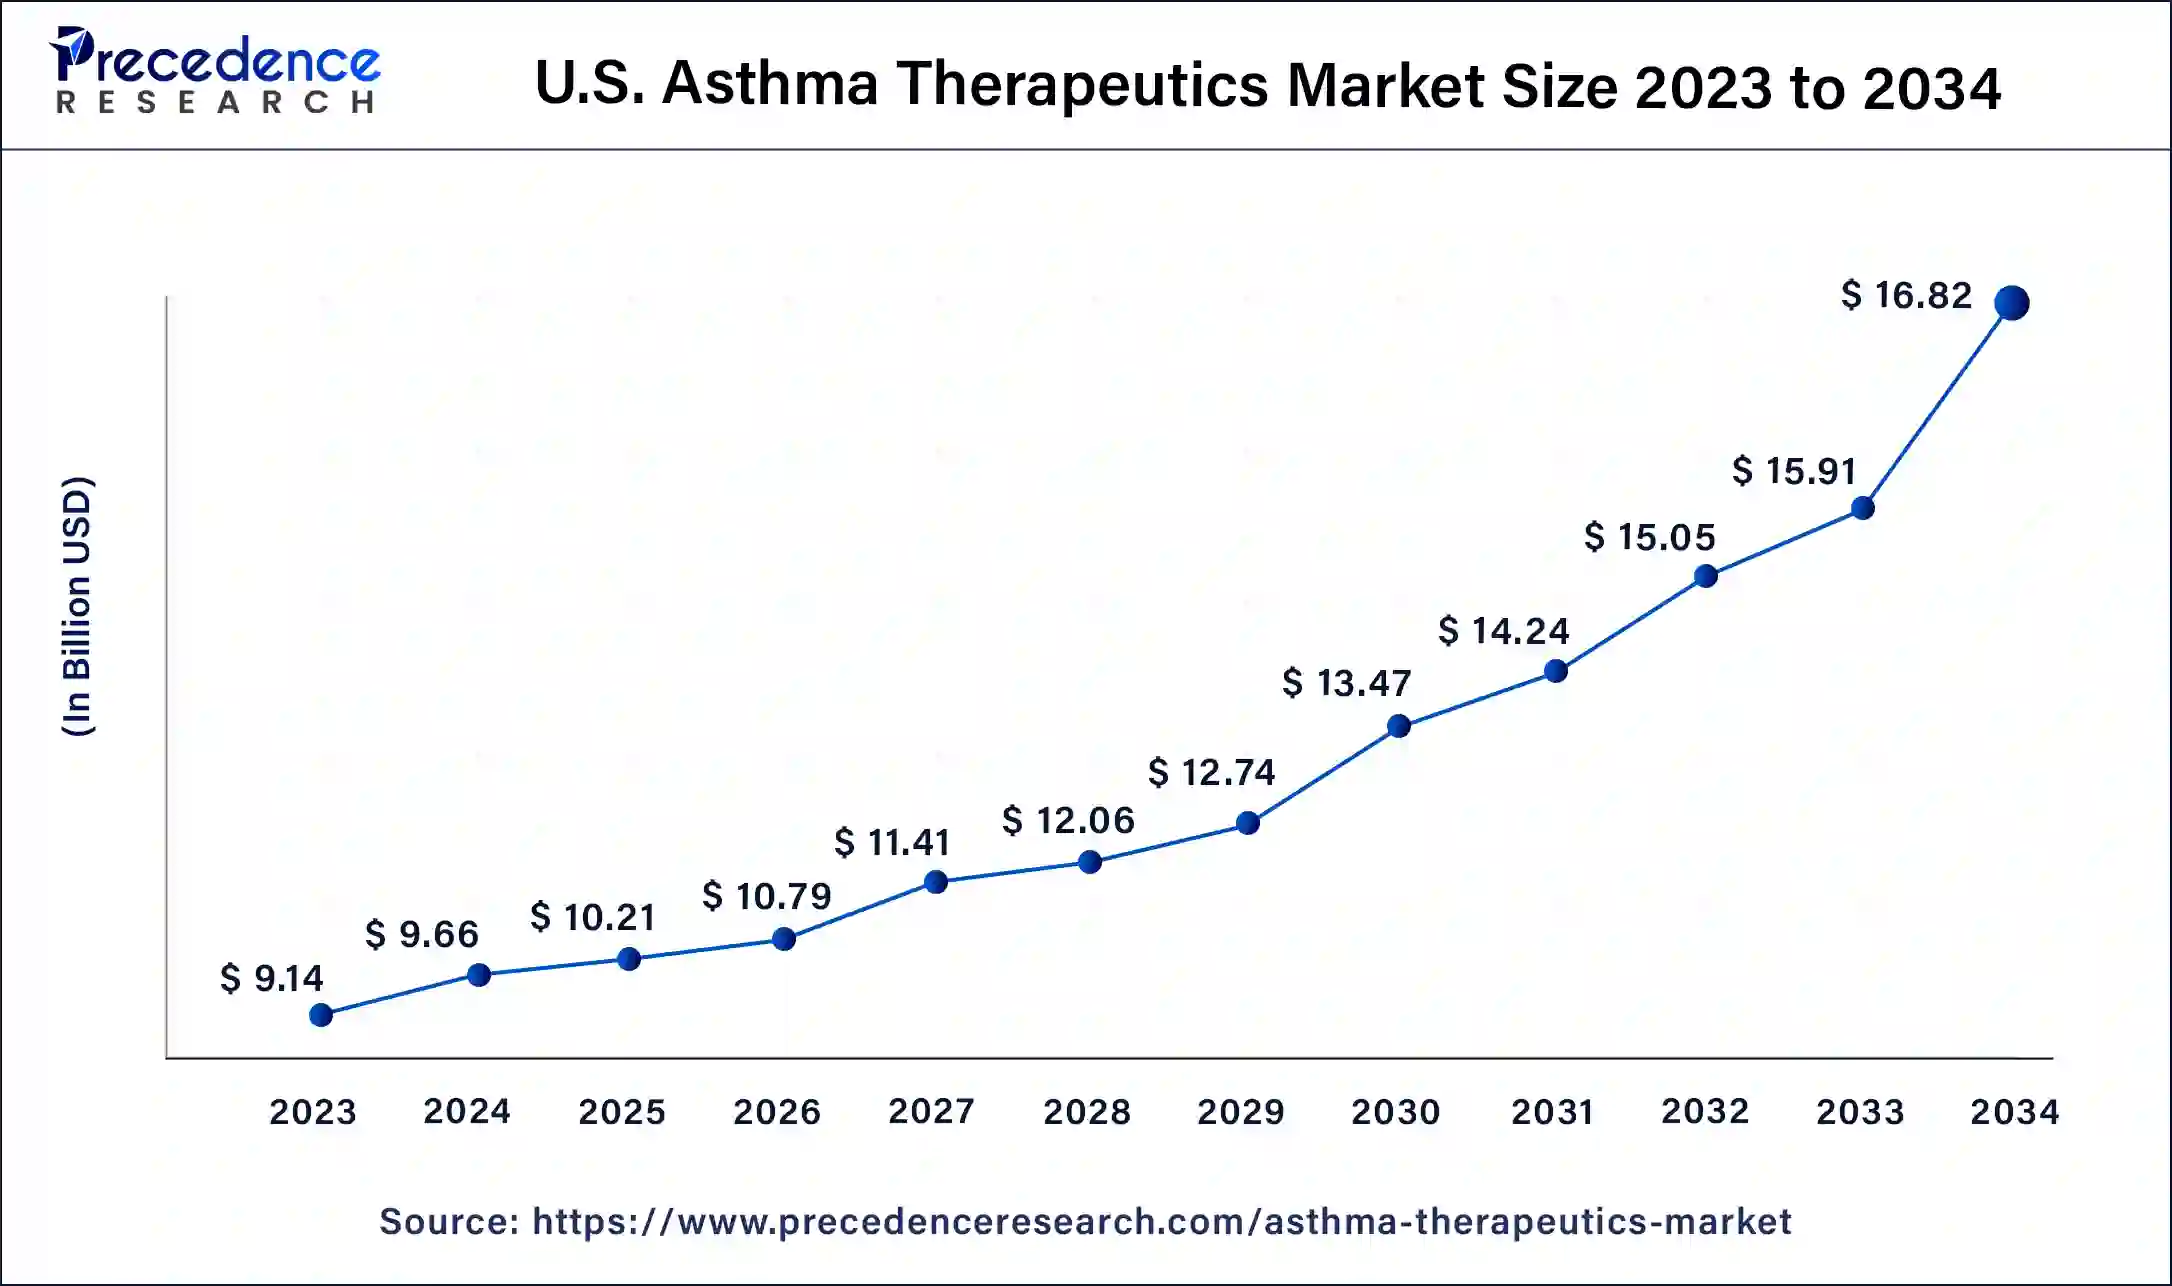 U.S. Asthma Therapeutics Market Size 2024 to 2034